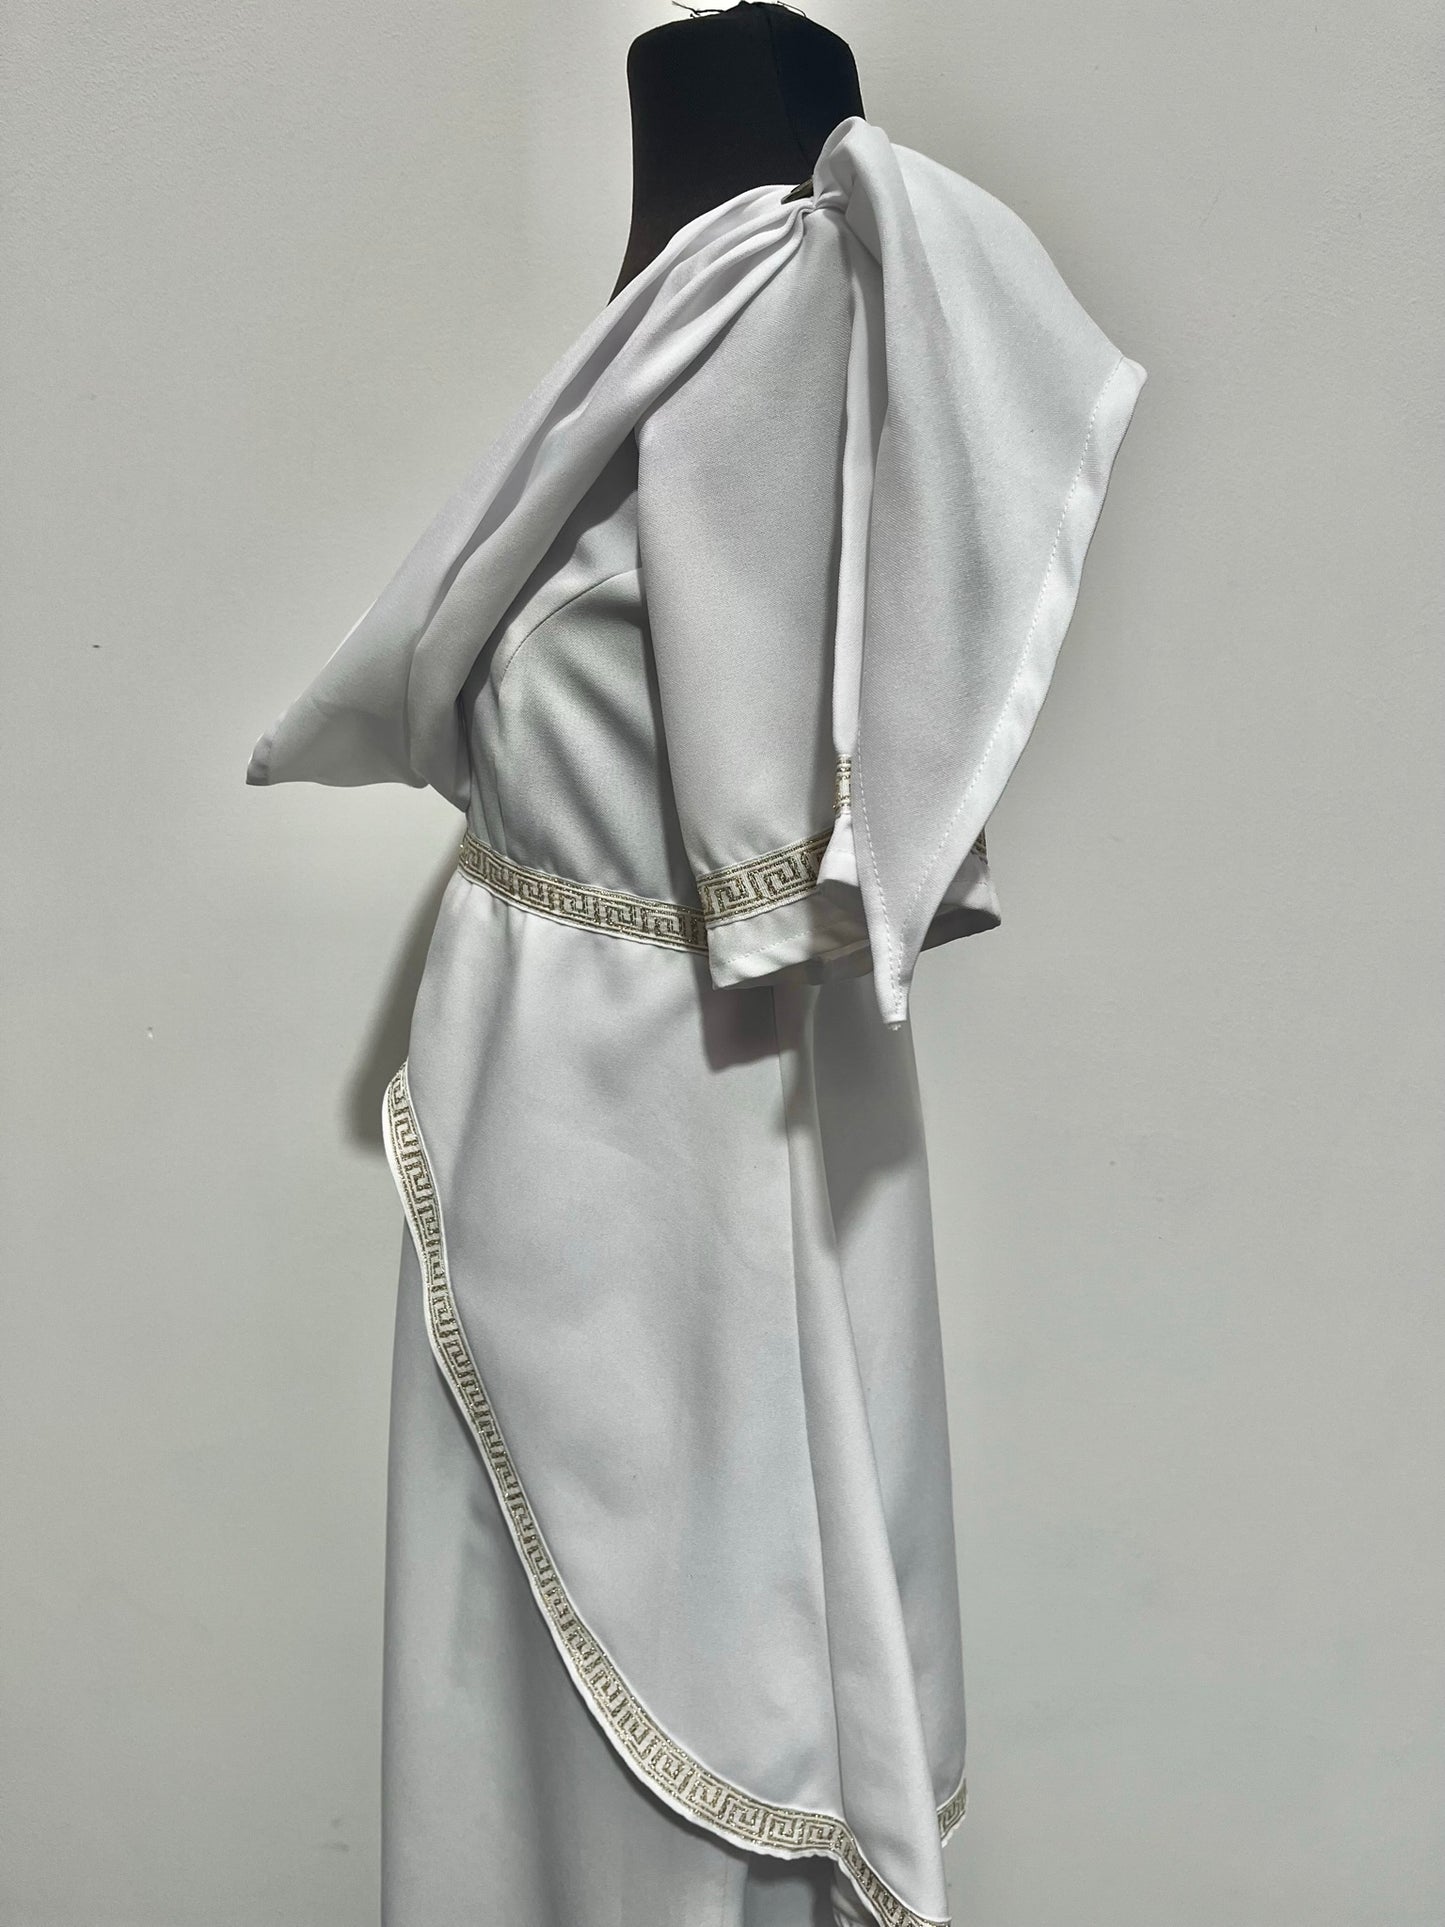 White Grecian Dress Size Small Roman/Greek - Ex Hire